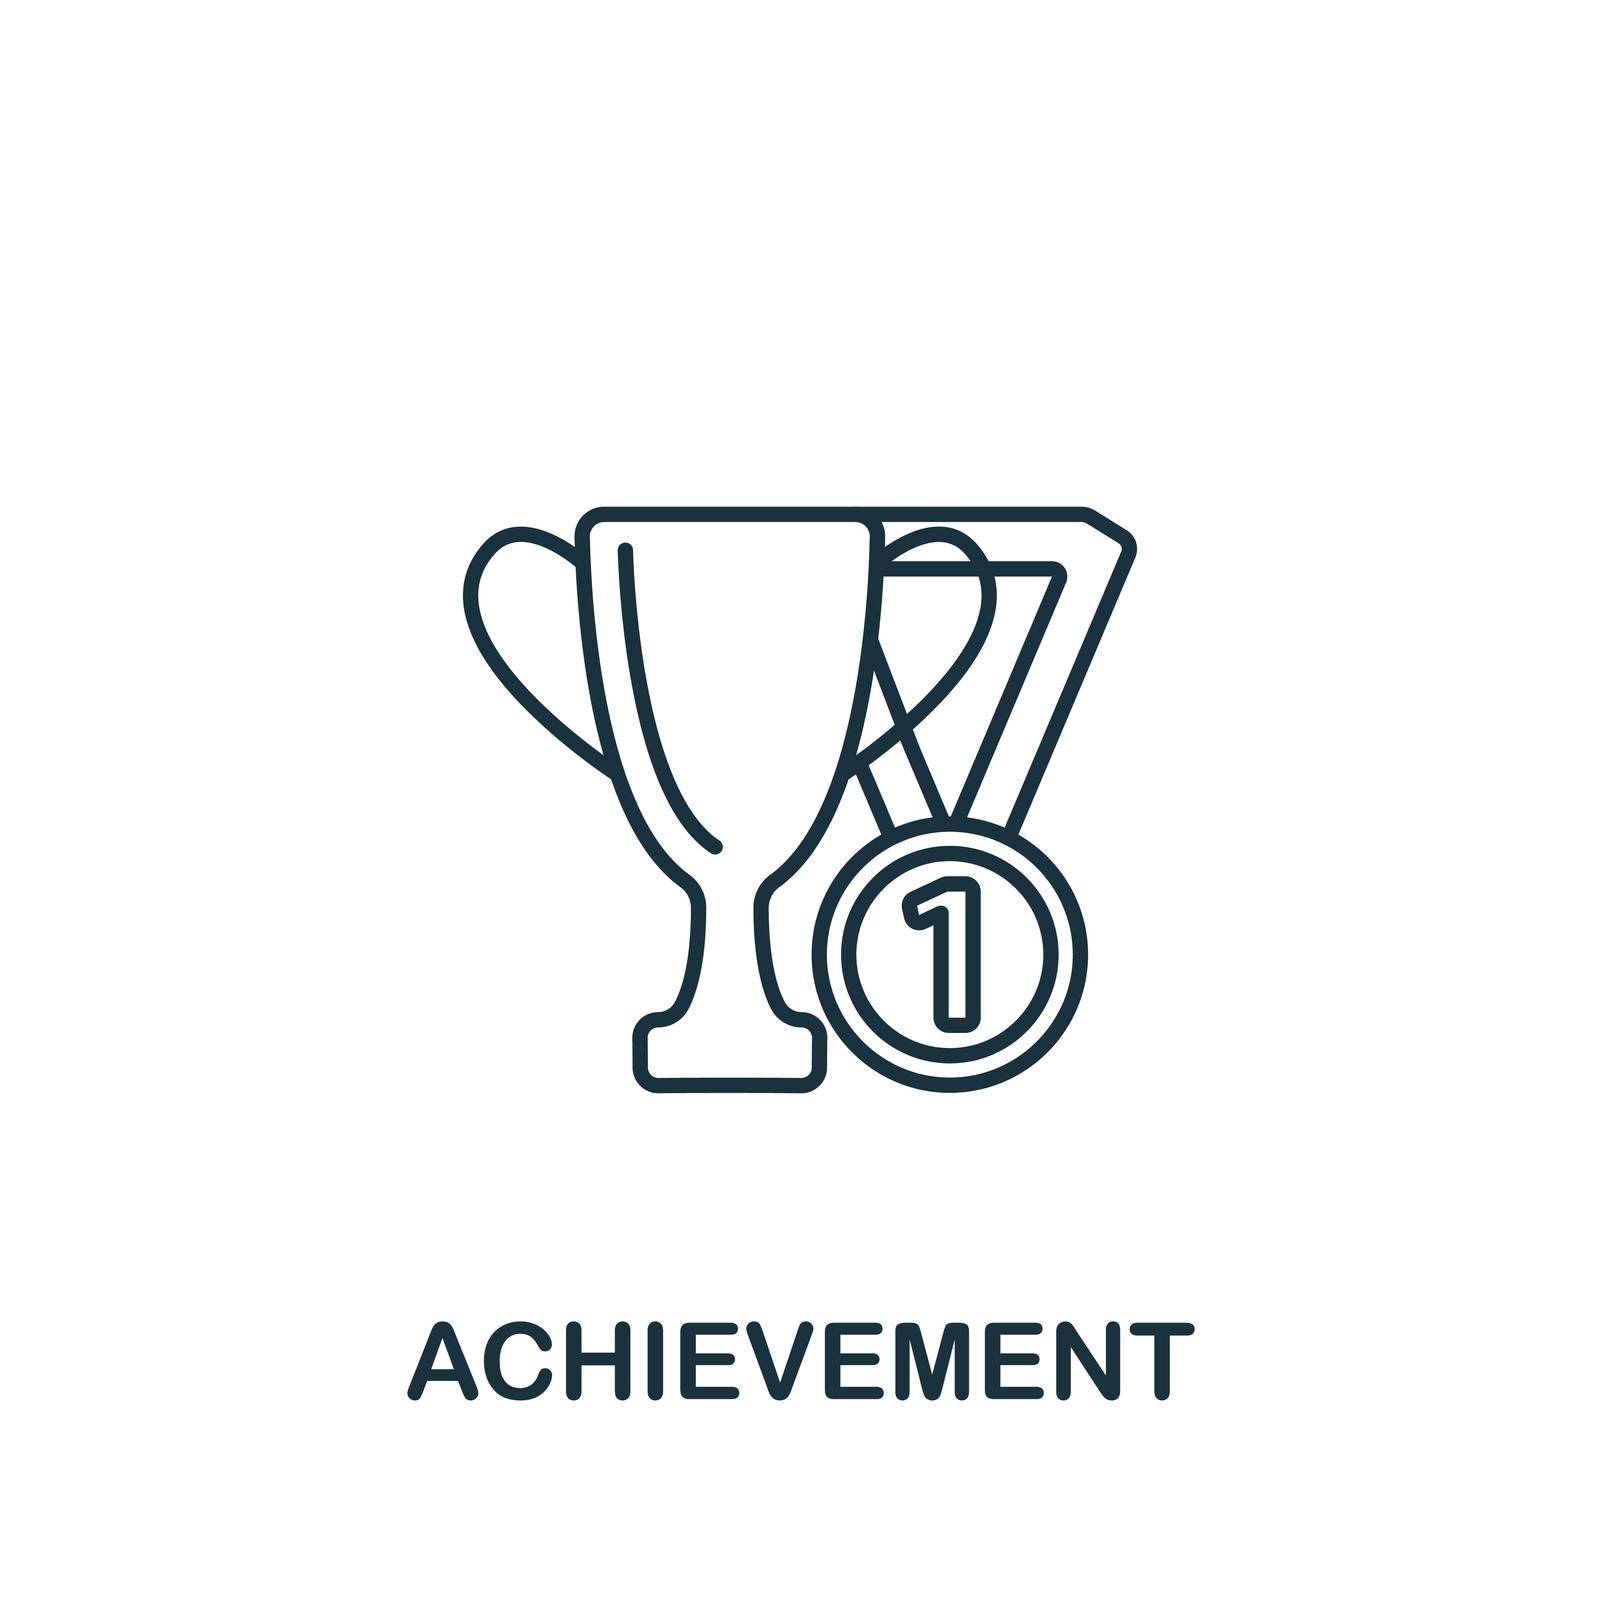 Achievement icon. Simple line element success symbol for templates, web design and infographics..